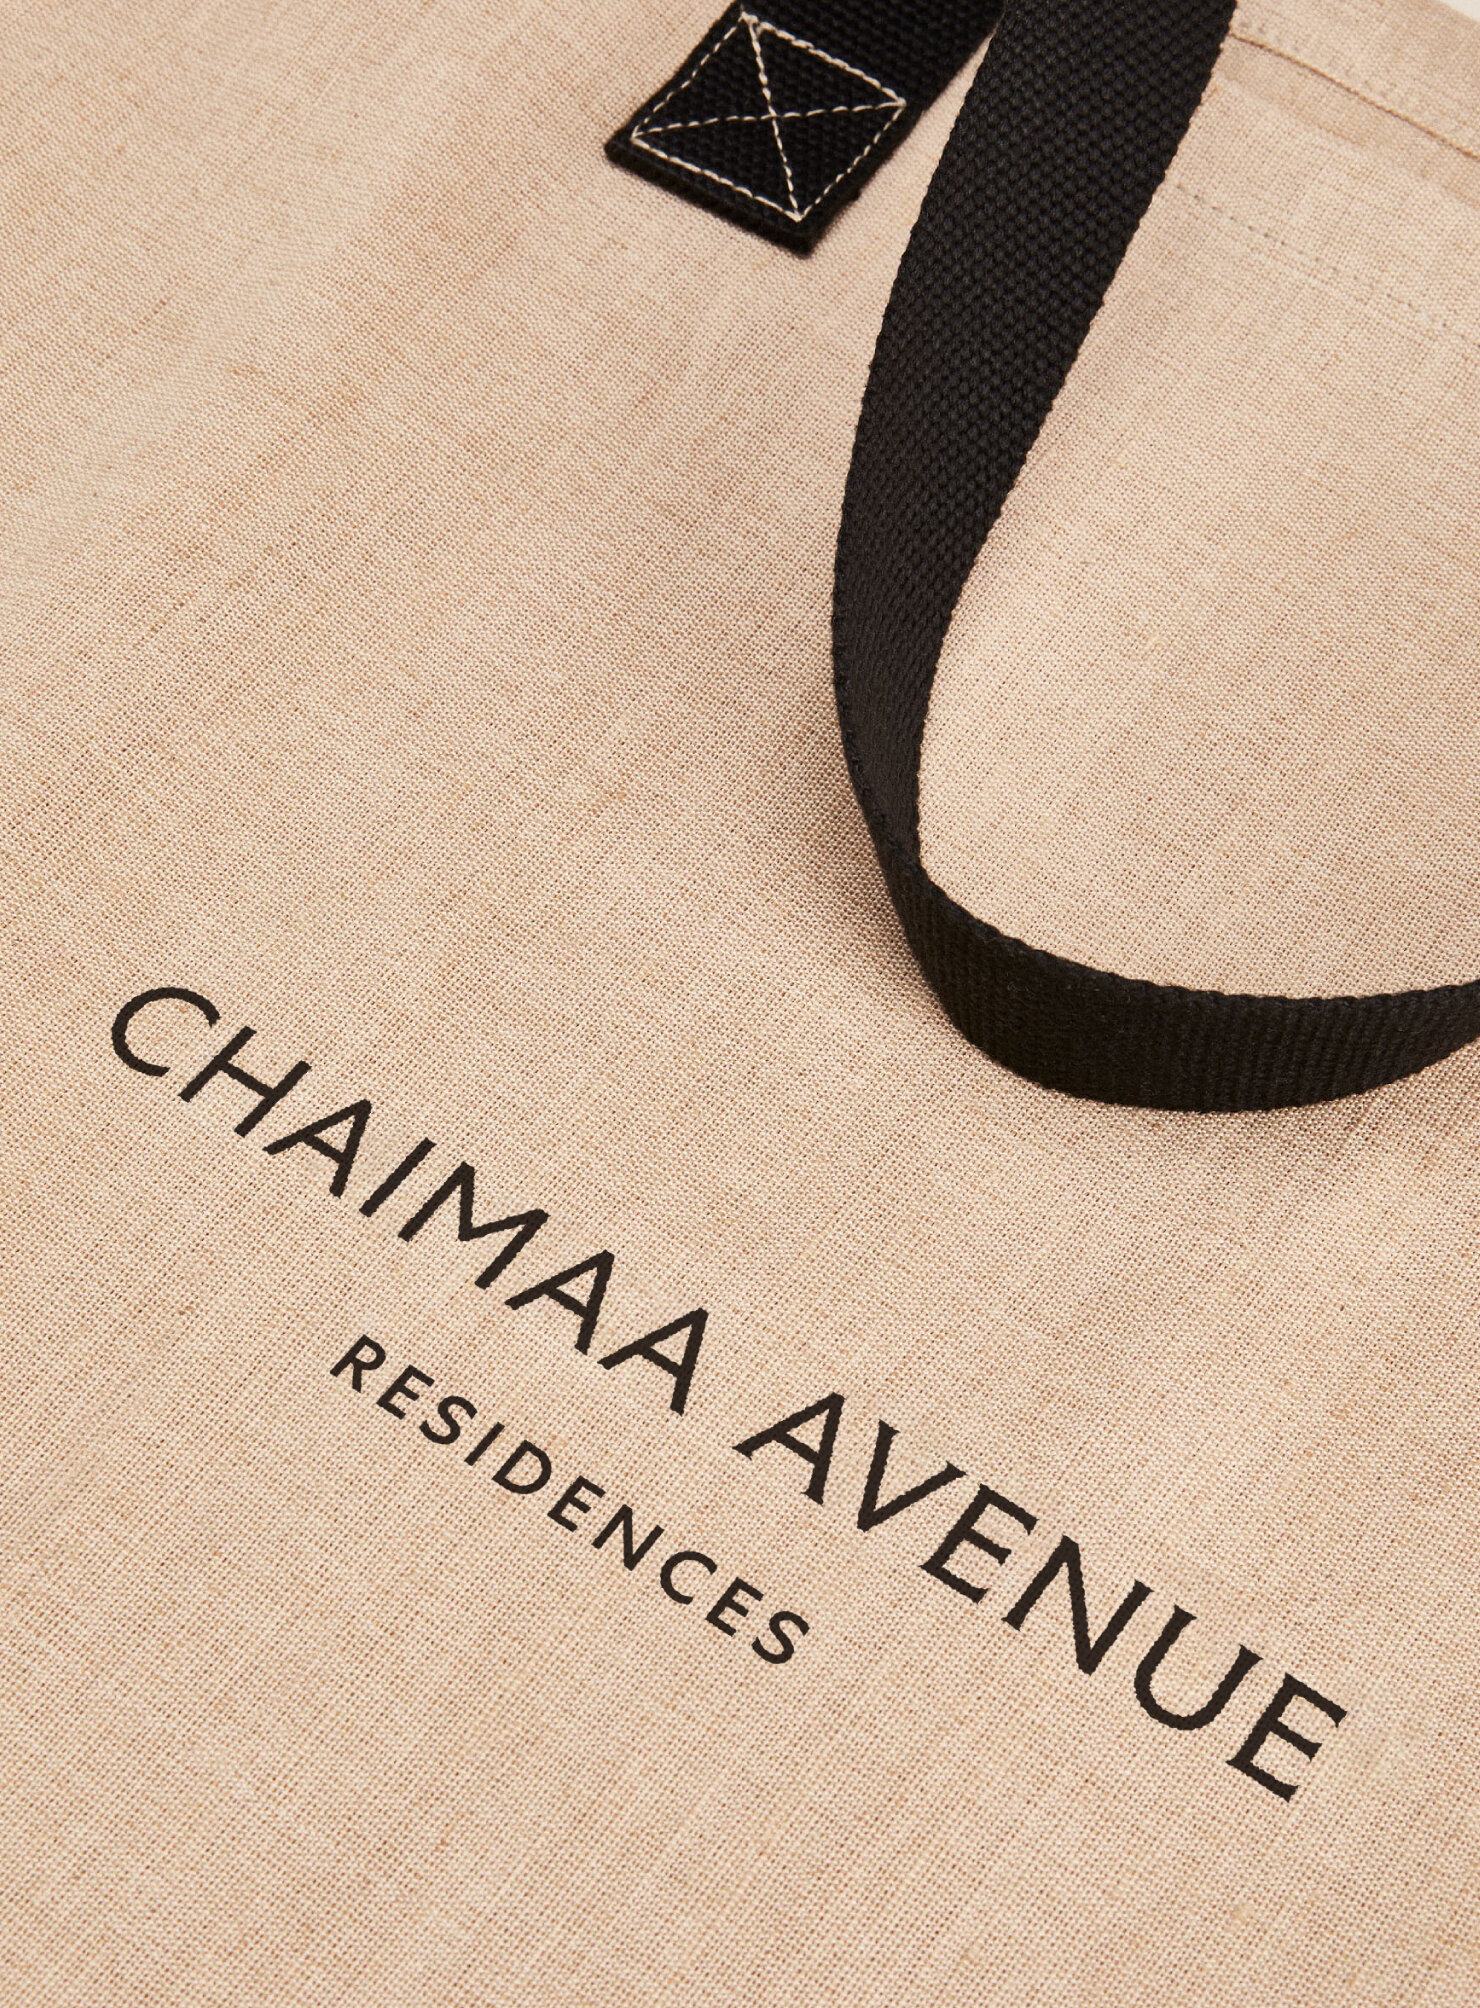 ChaimaaAvenue_Calendar_Branding_10.jpg